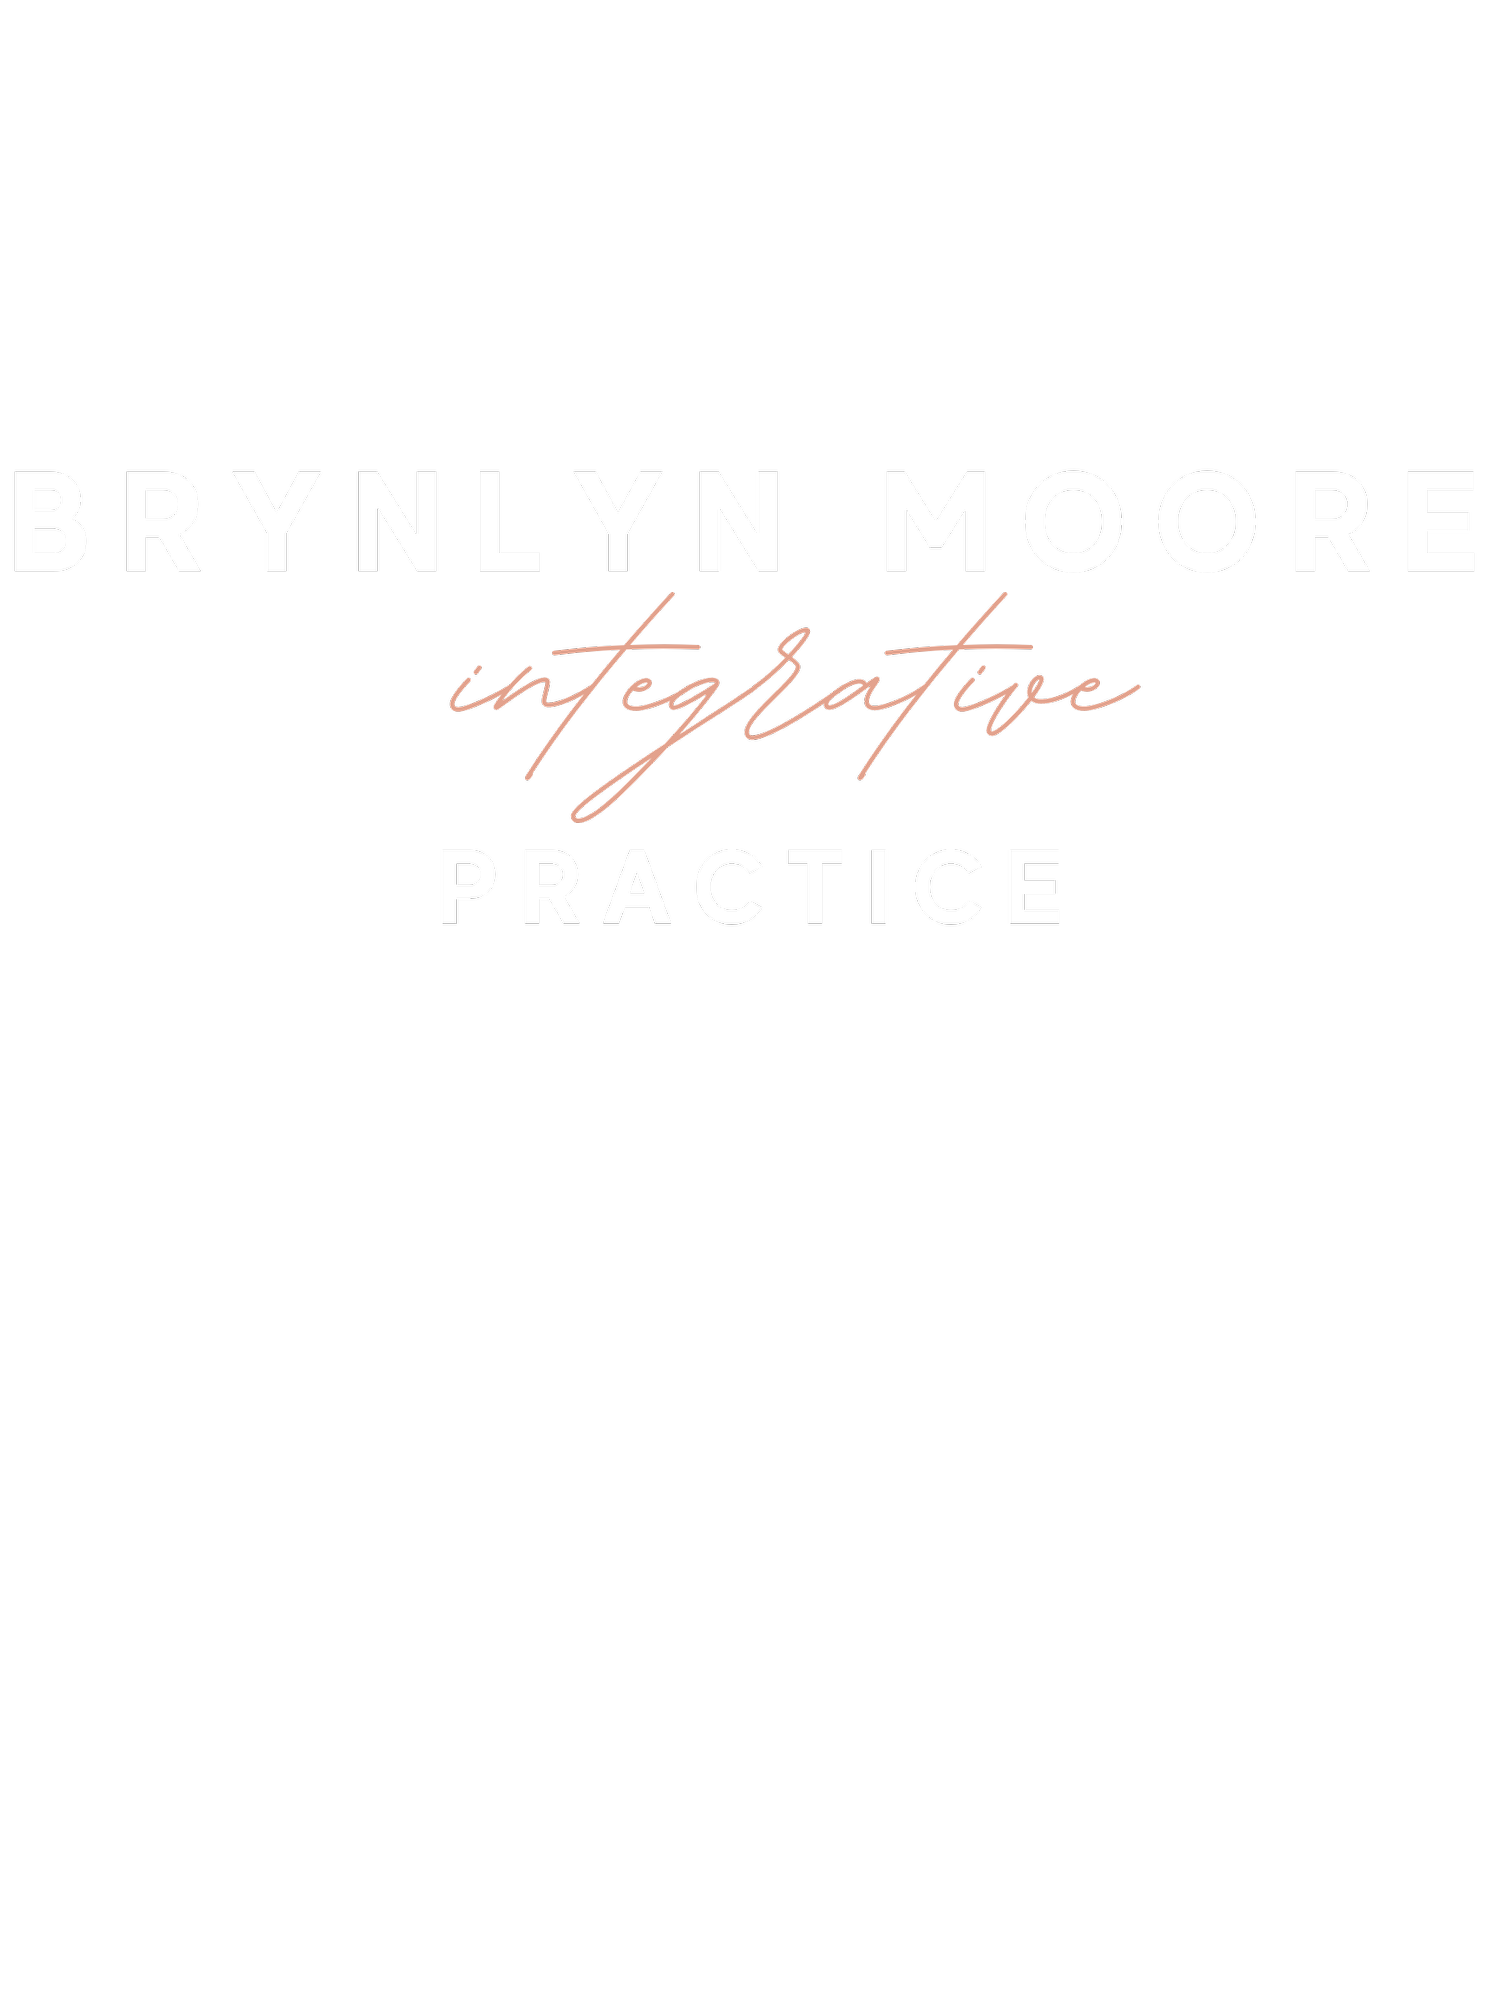 brynlyn moore Integrative Practice